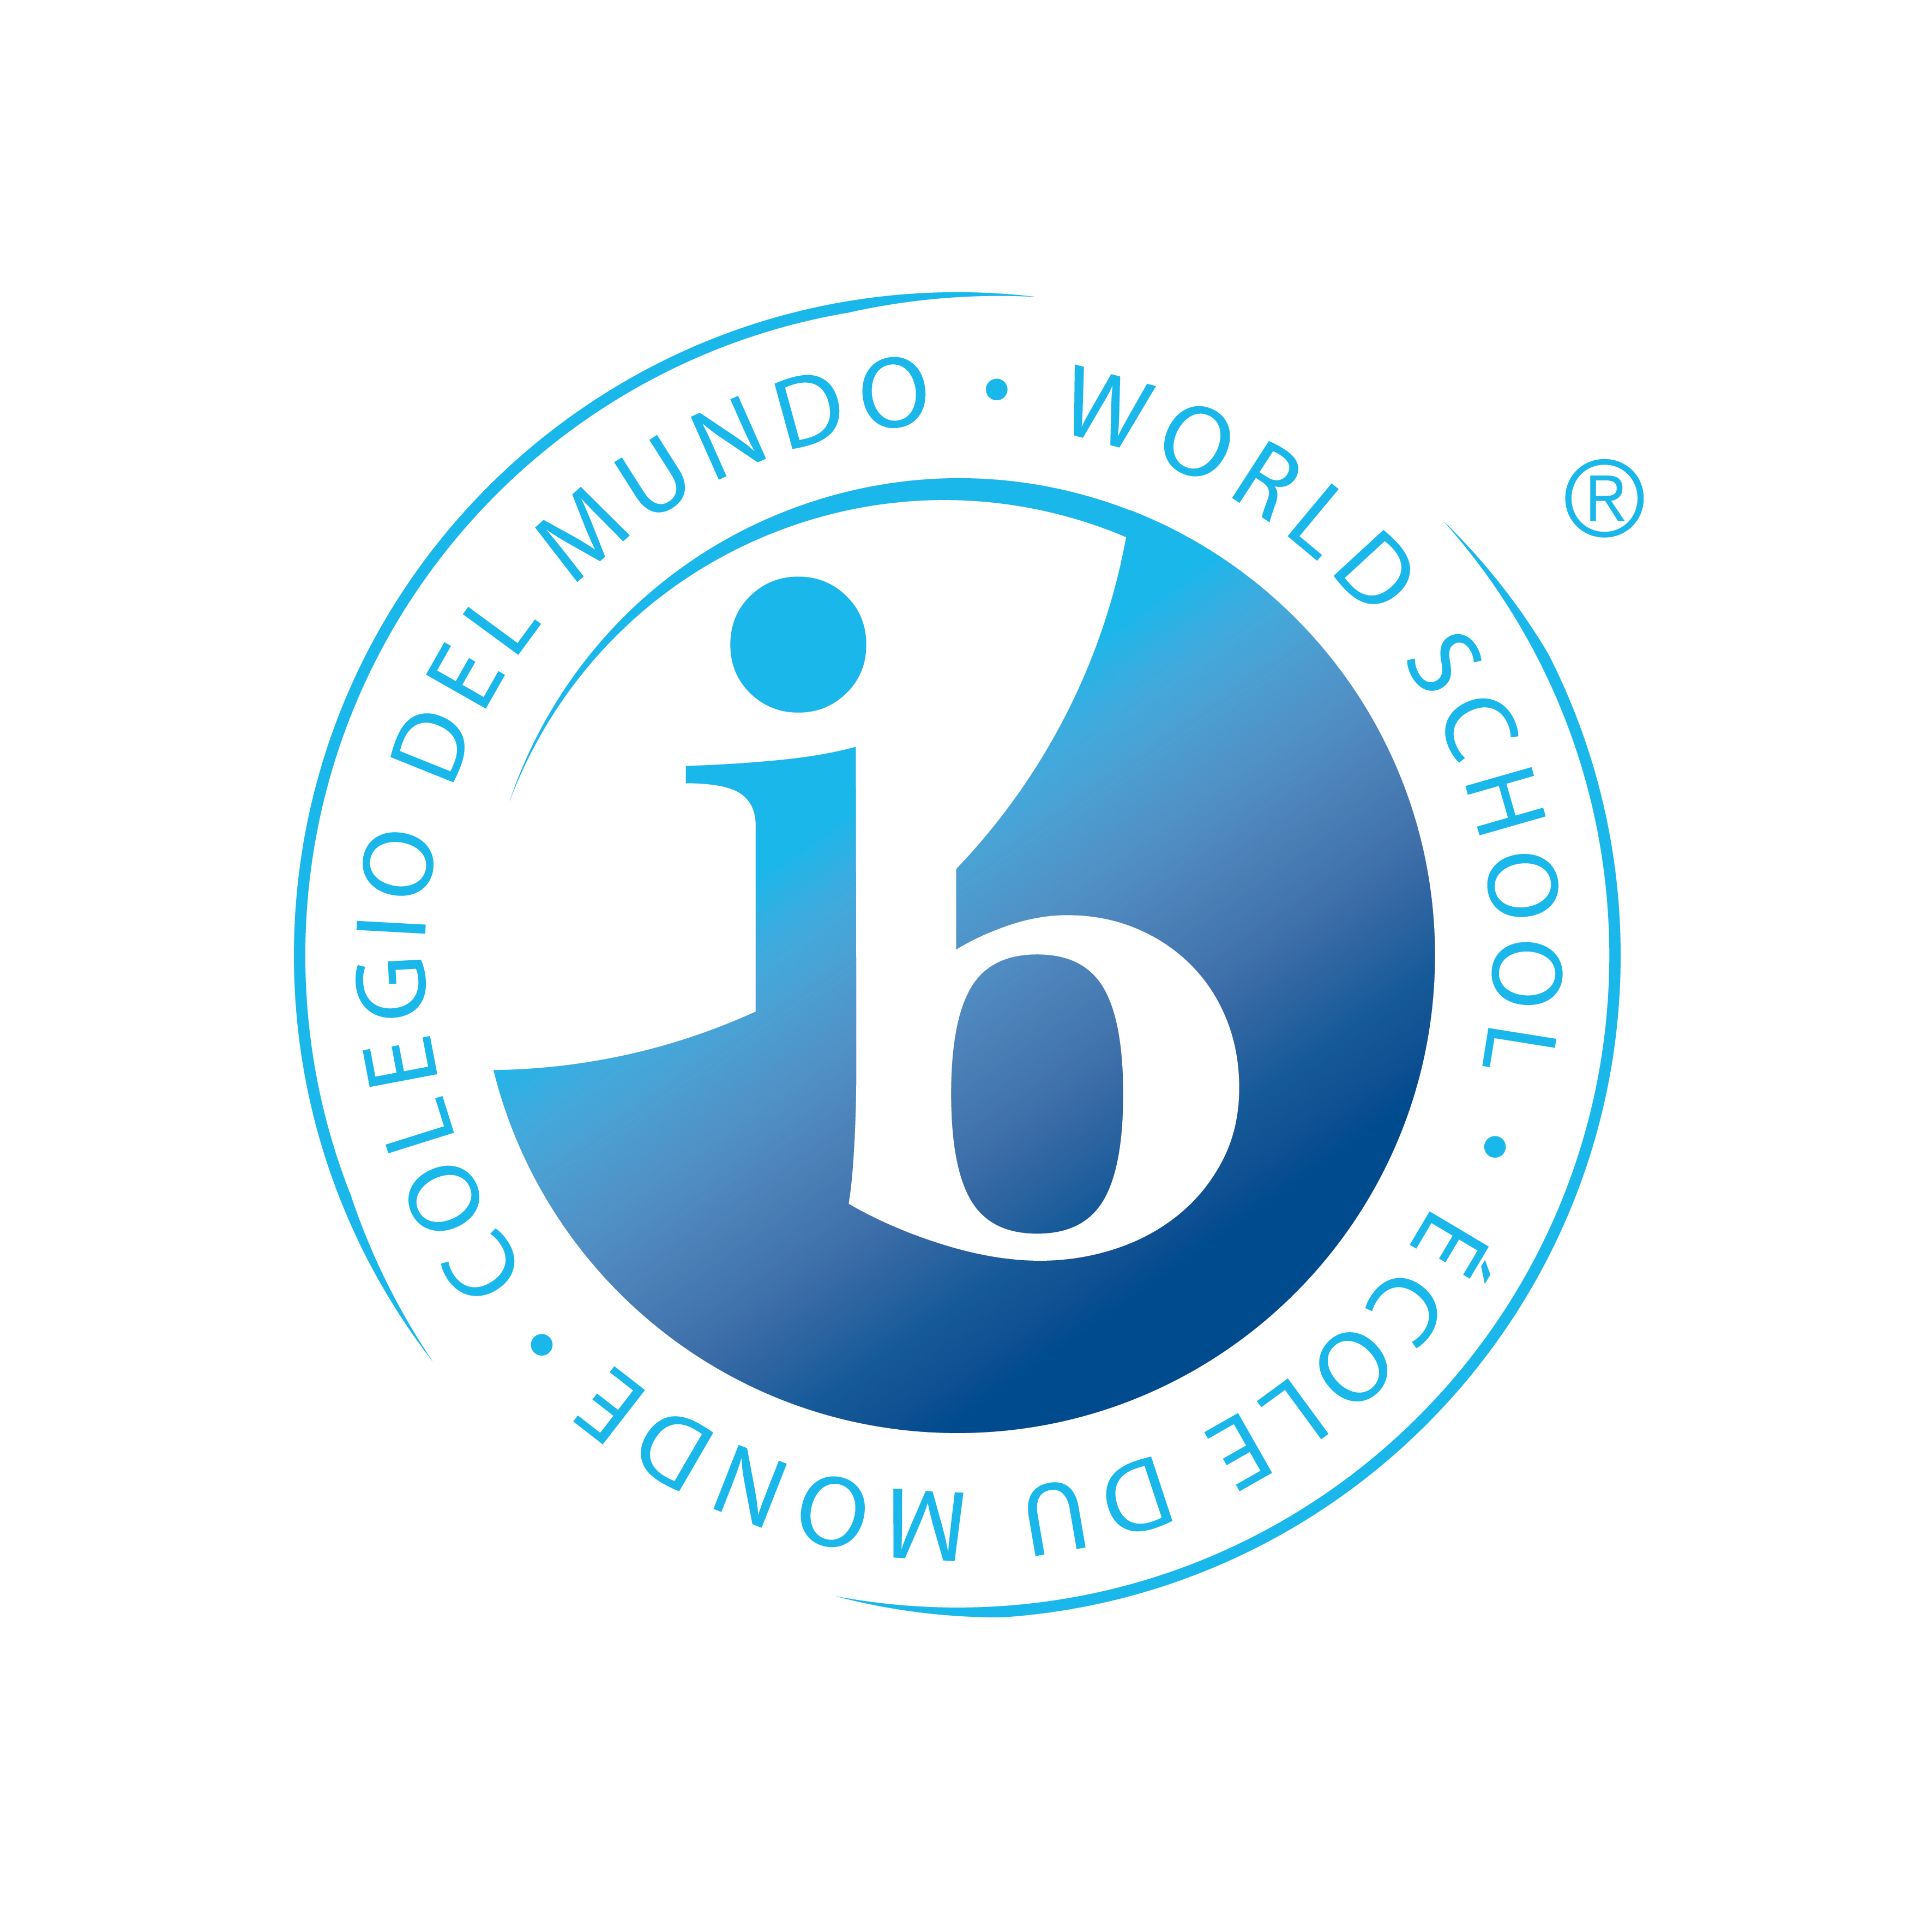 ib-world-school-logo-2-colour2-01.jpg